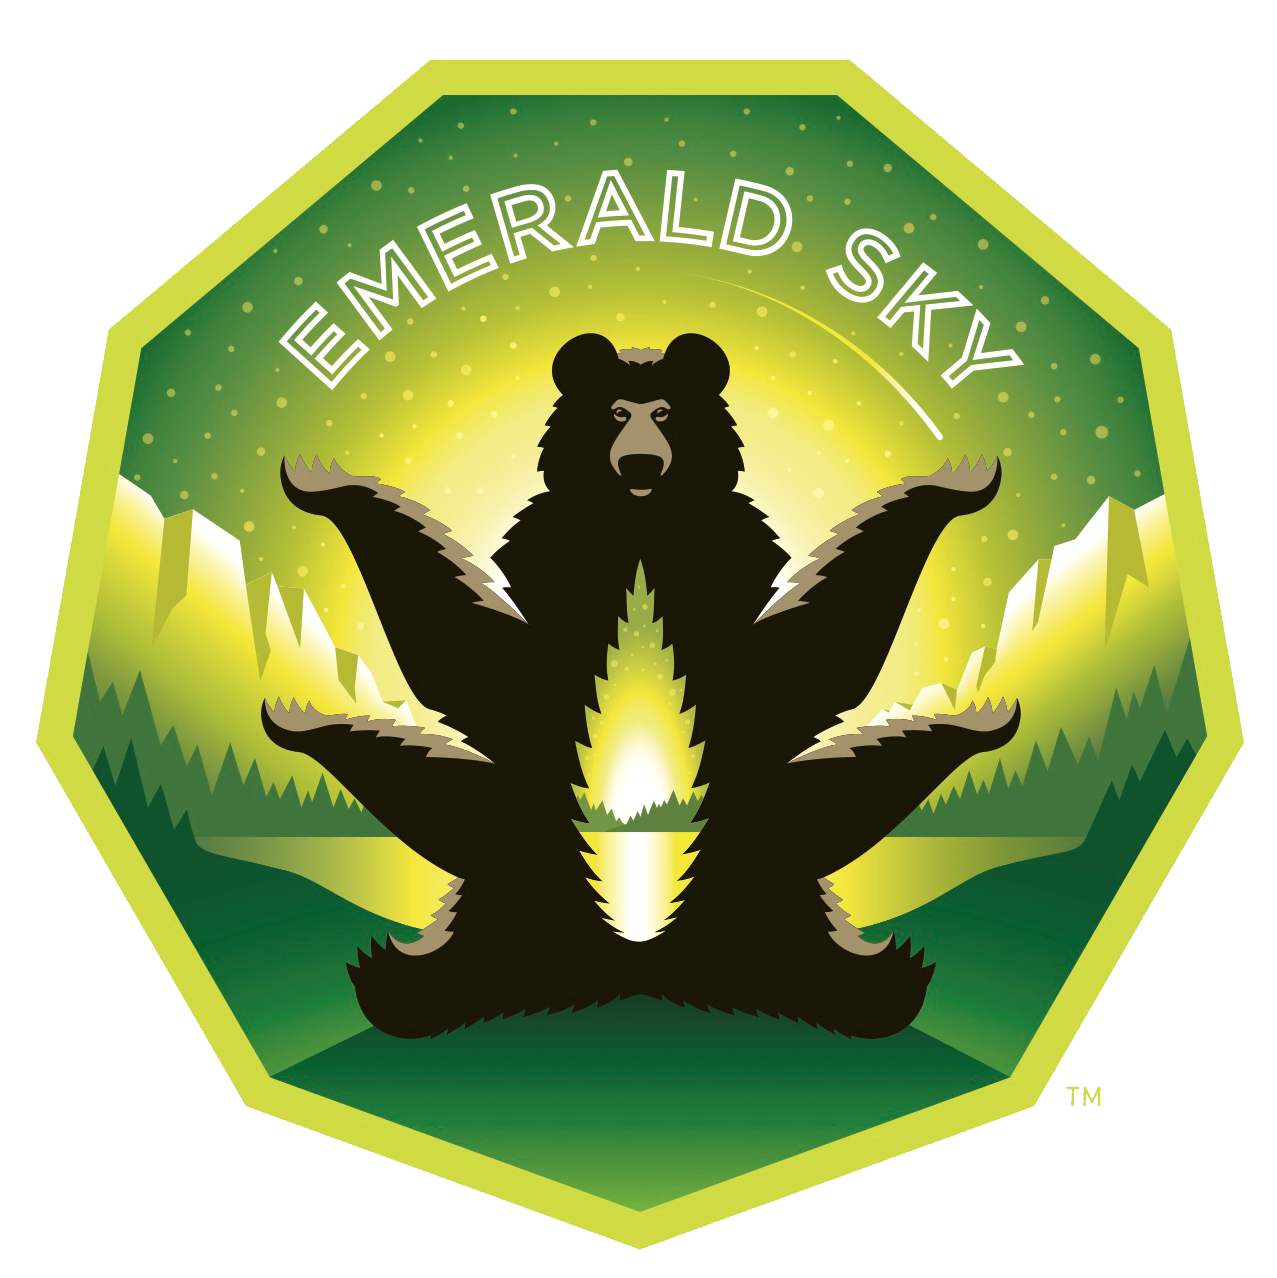 The logo of Emerald Sky